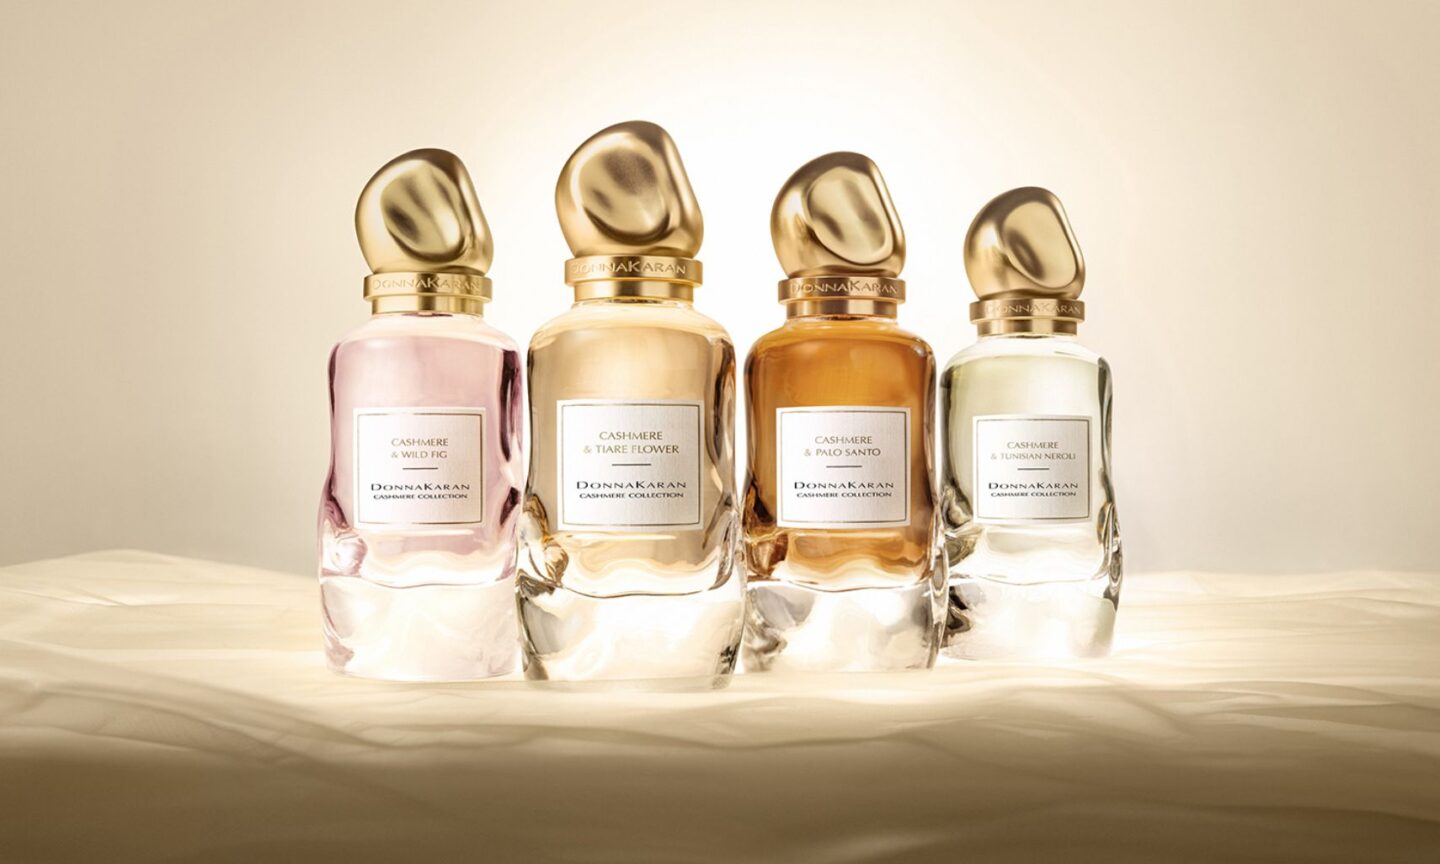 Donna Karan New York Cashmere Collection fragrances